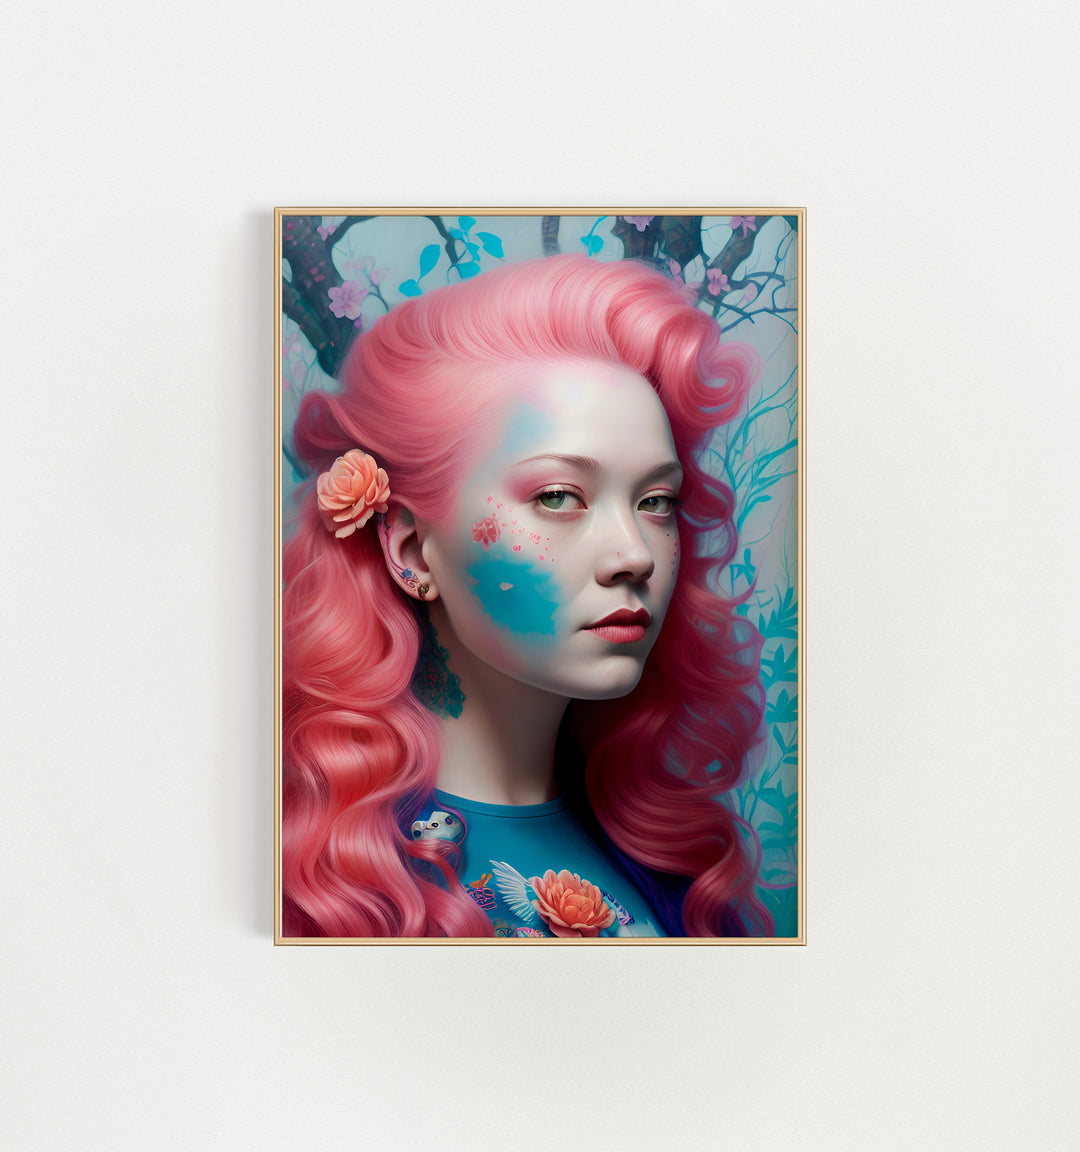 Cotton Candy Pink Hair Wall Art Poster - Yililo